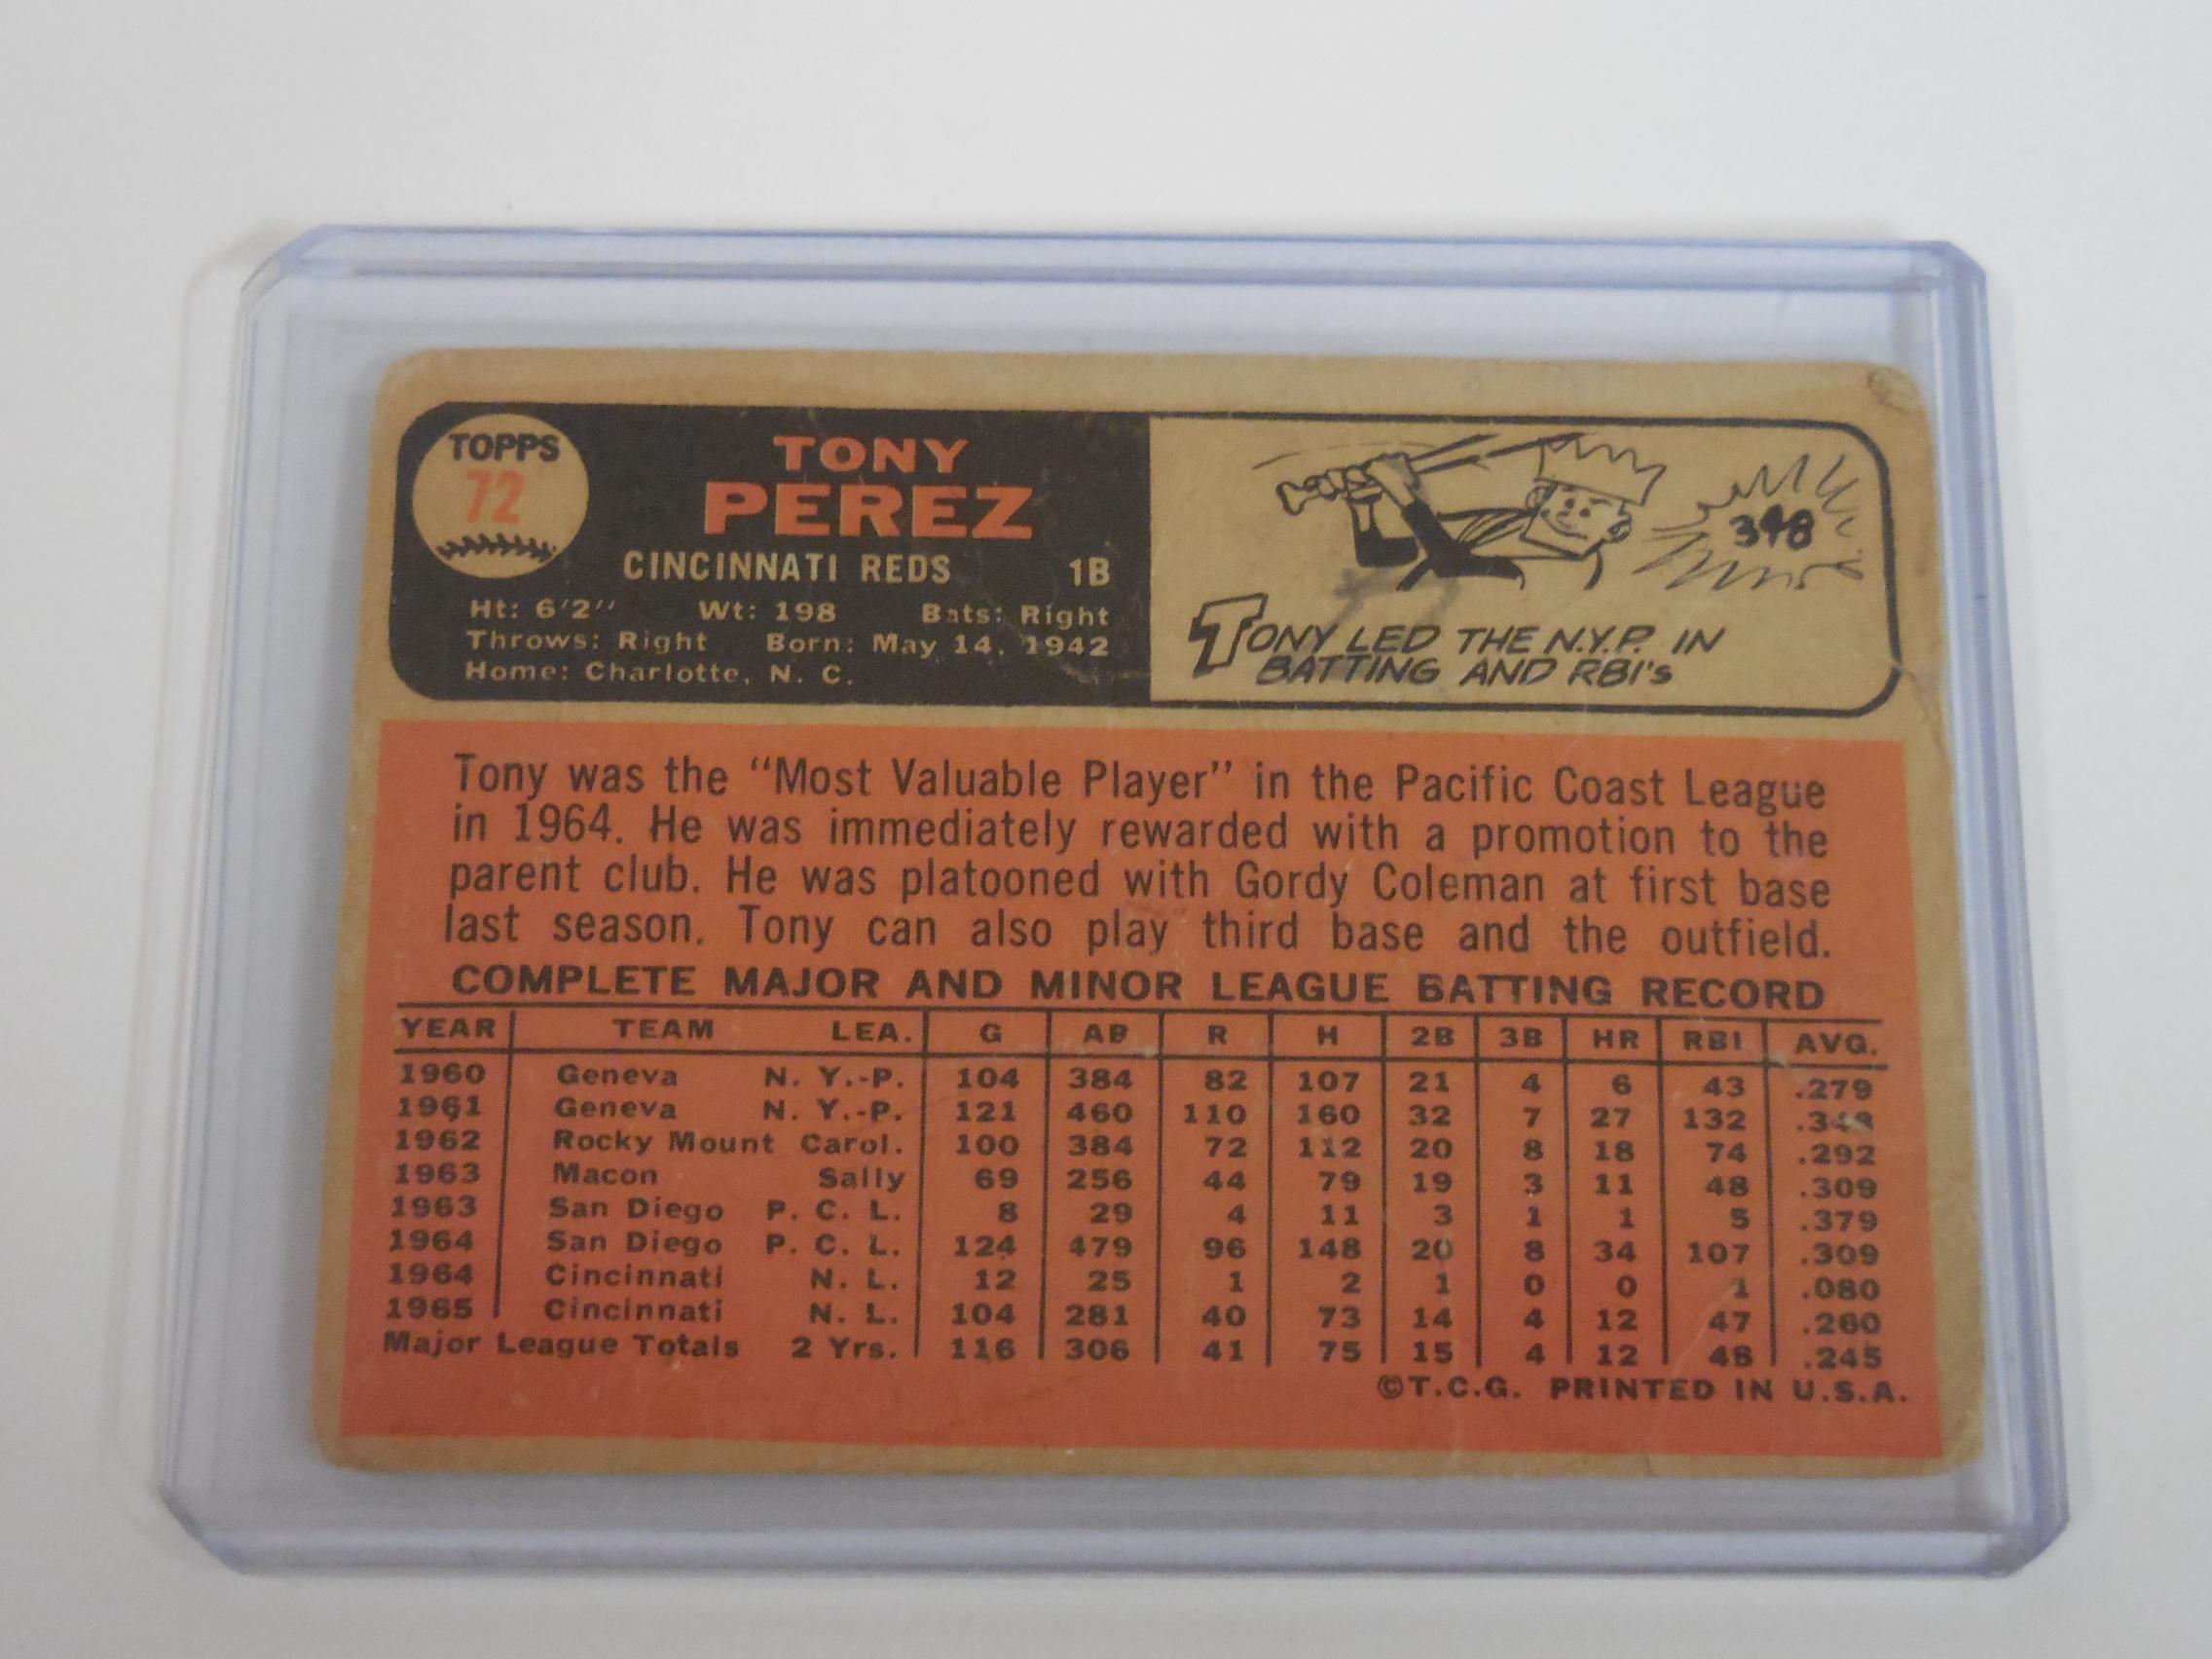 1966 TOPPS BASEBALL #72 TONY PEREZ TOPPS ALL STAR ROOKIE CARD CINCINNATI REDS